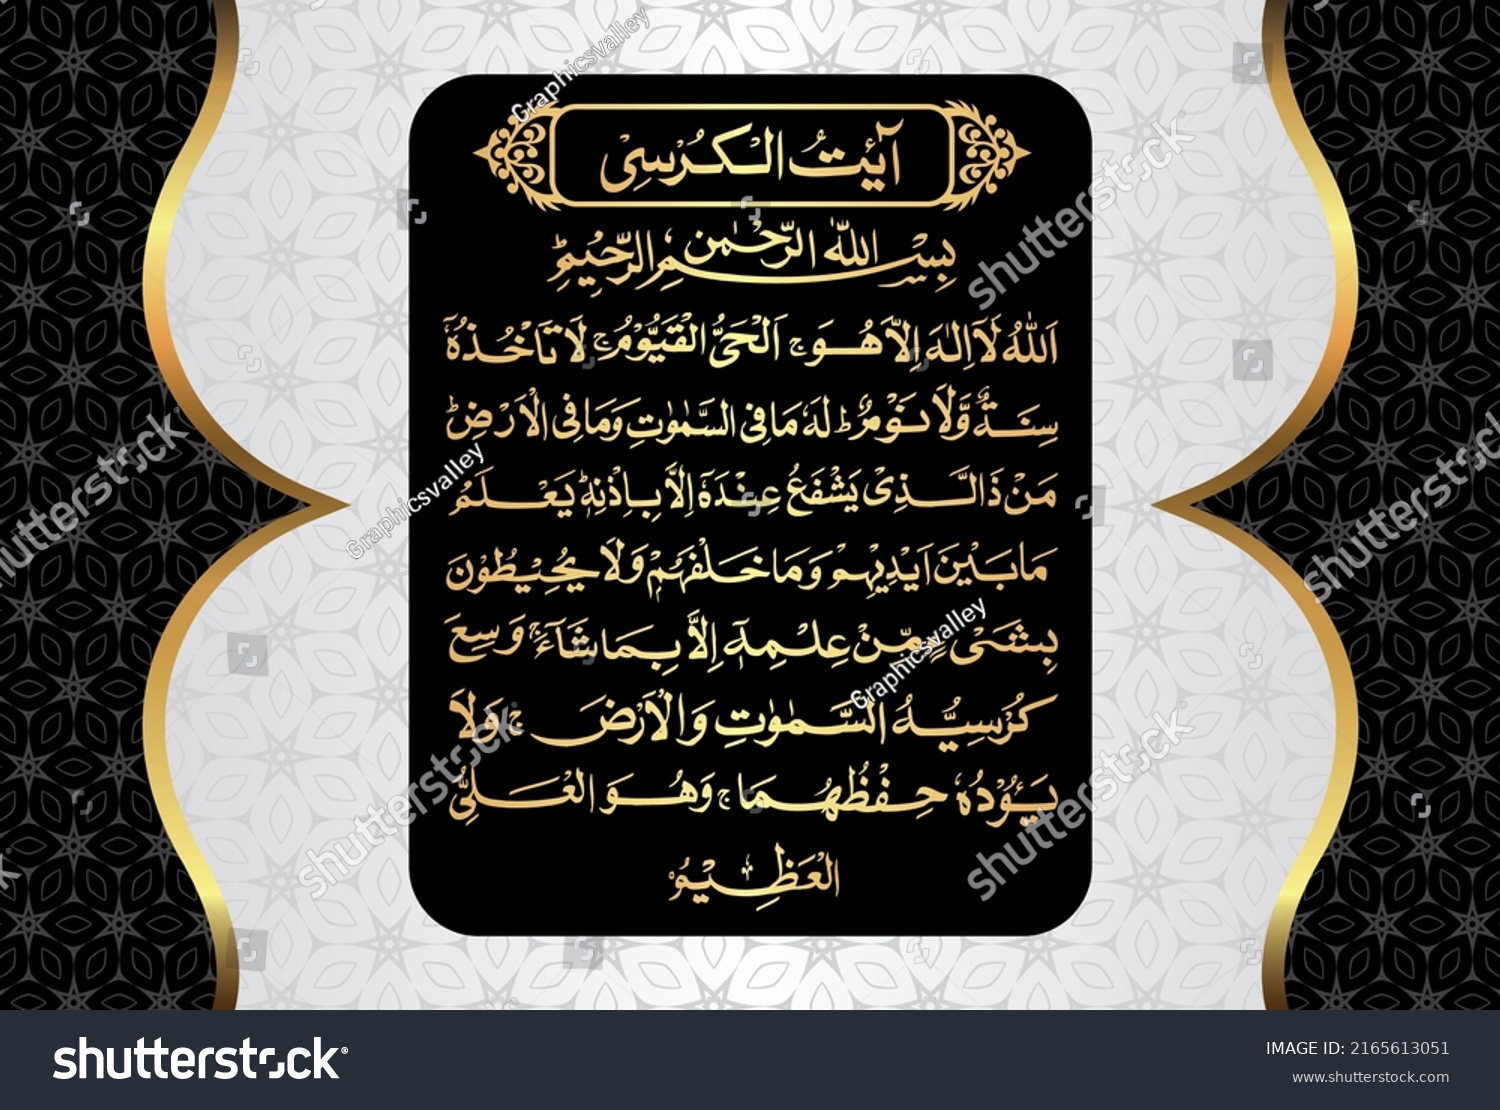 SVG of Arabic Calligraphy of Ayatul Kursi, Ayat tul Kursi. Surah Al Baqarah 2, 255 of the Noble Quran. Translation, 